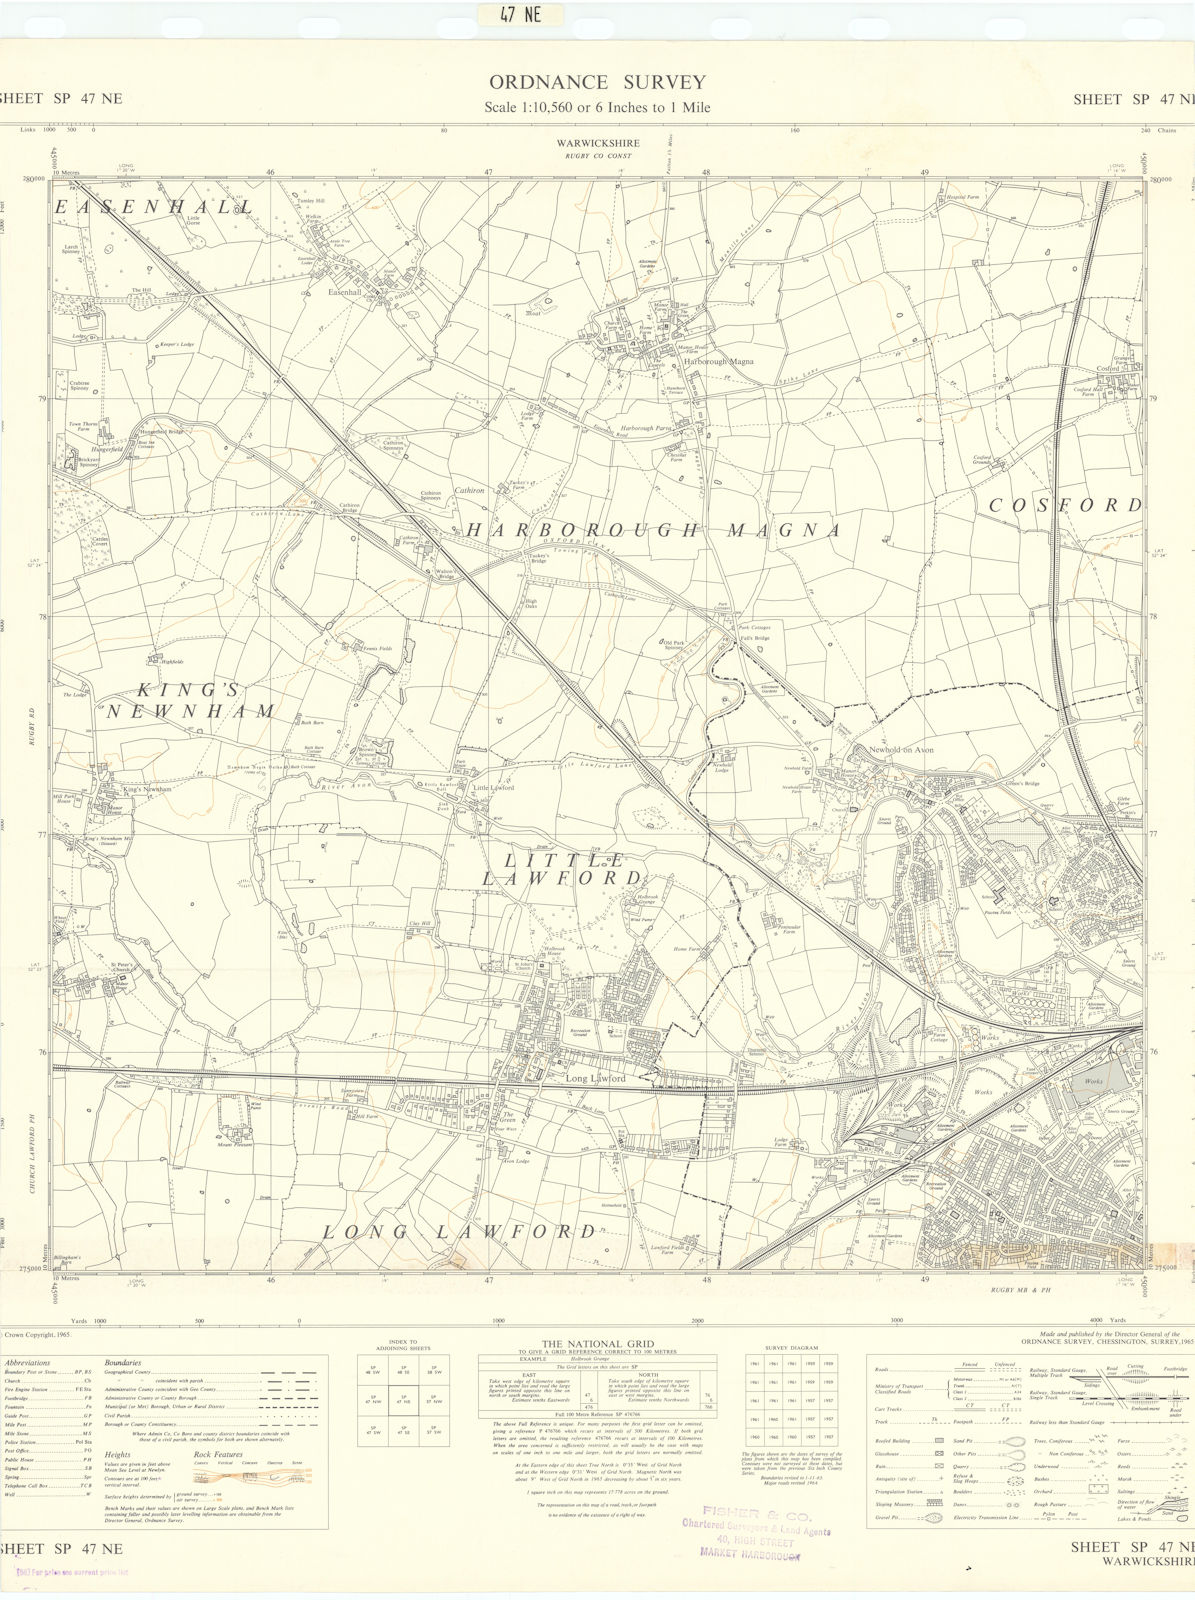 Ordnance Survey SP47NE Warks Rugby Newbold/Avon Long Lawford Harborough 1965 map